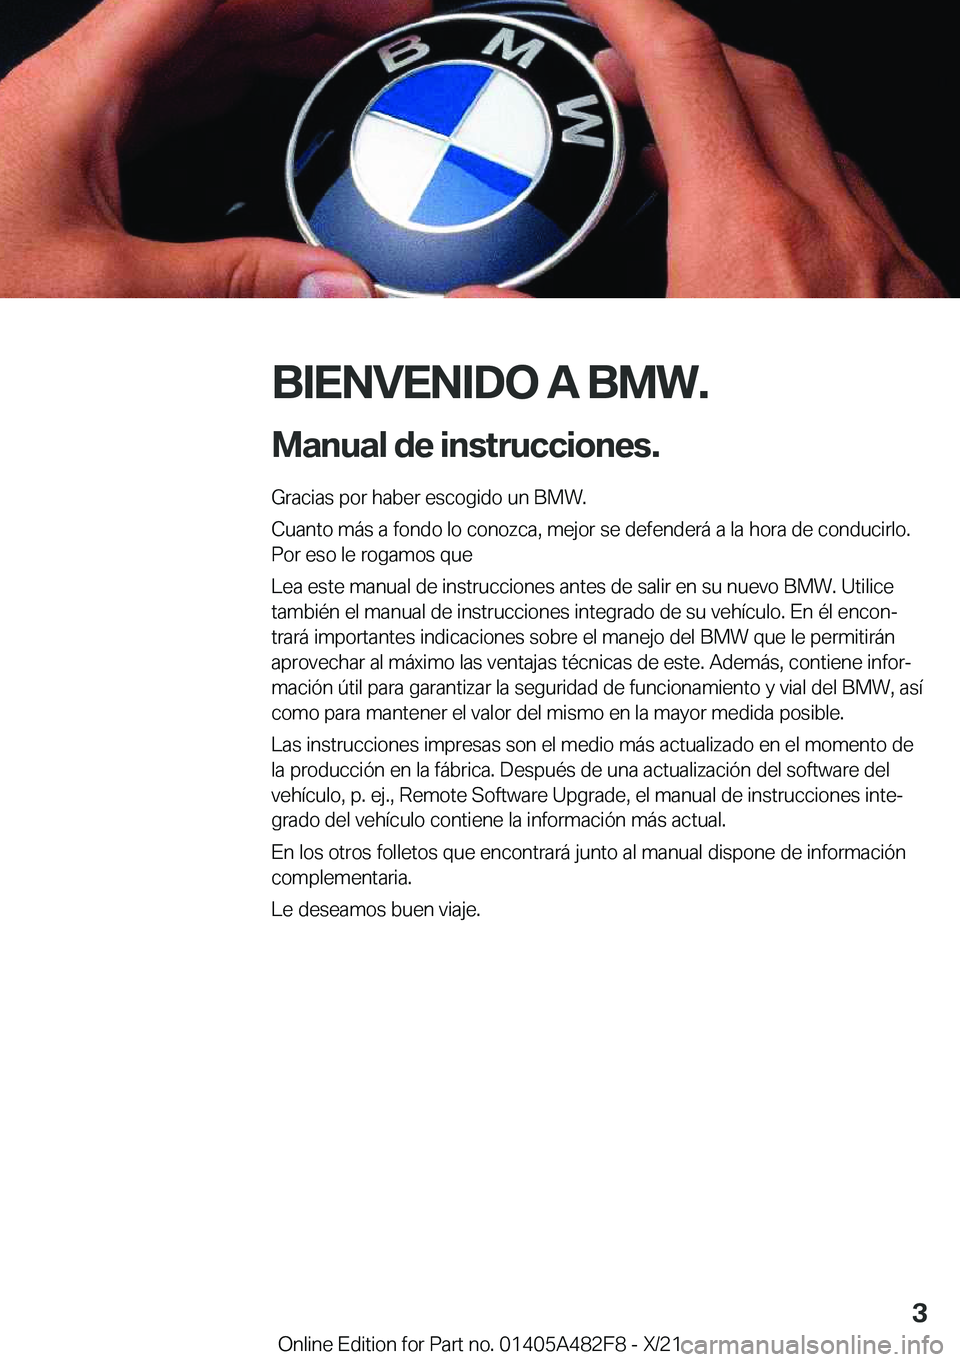 BMW X3 2022  Manuales de Empleo (in Spanish) �B�I�E�N�V�E�N�I�D�O��A��B�M�W�.
�M�a�n�u�a�l��d�e��i�n�s�t�r�u�c�c�i�o�n�e�s�. �G�r�a�c�i�a�s��p�o�r��h�a�b�e�r��e�s�c�o�g�i�d�o��u�n��B�M�W�.
�C�u�a�n�t�o��m�